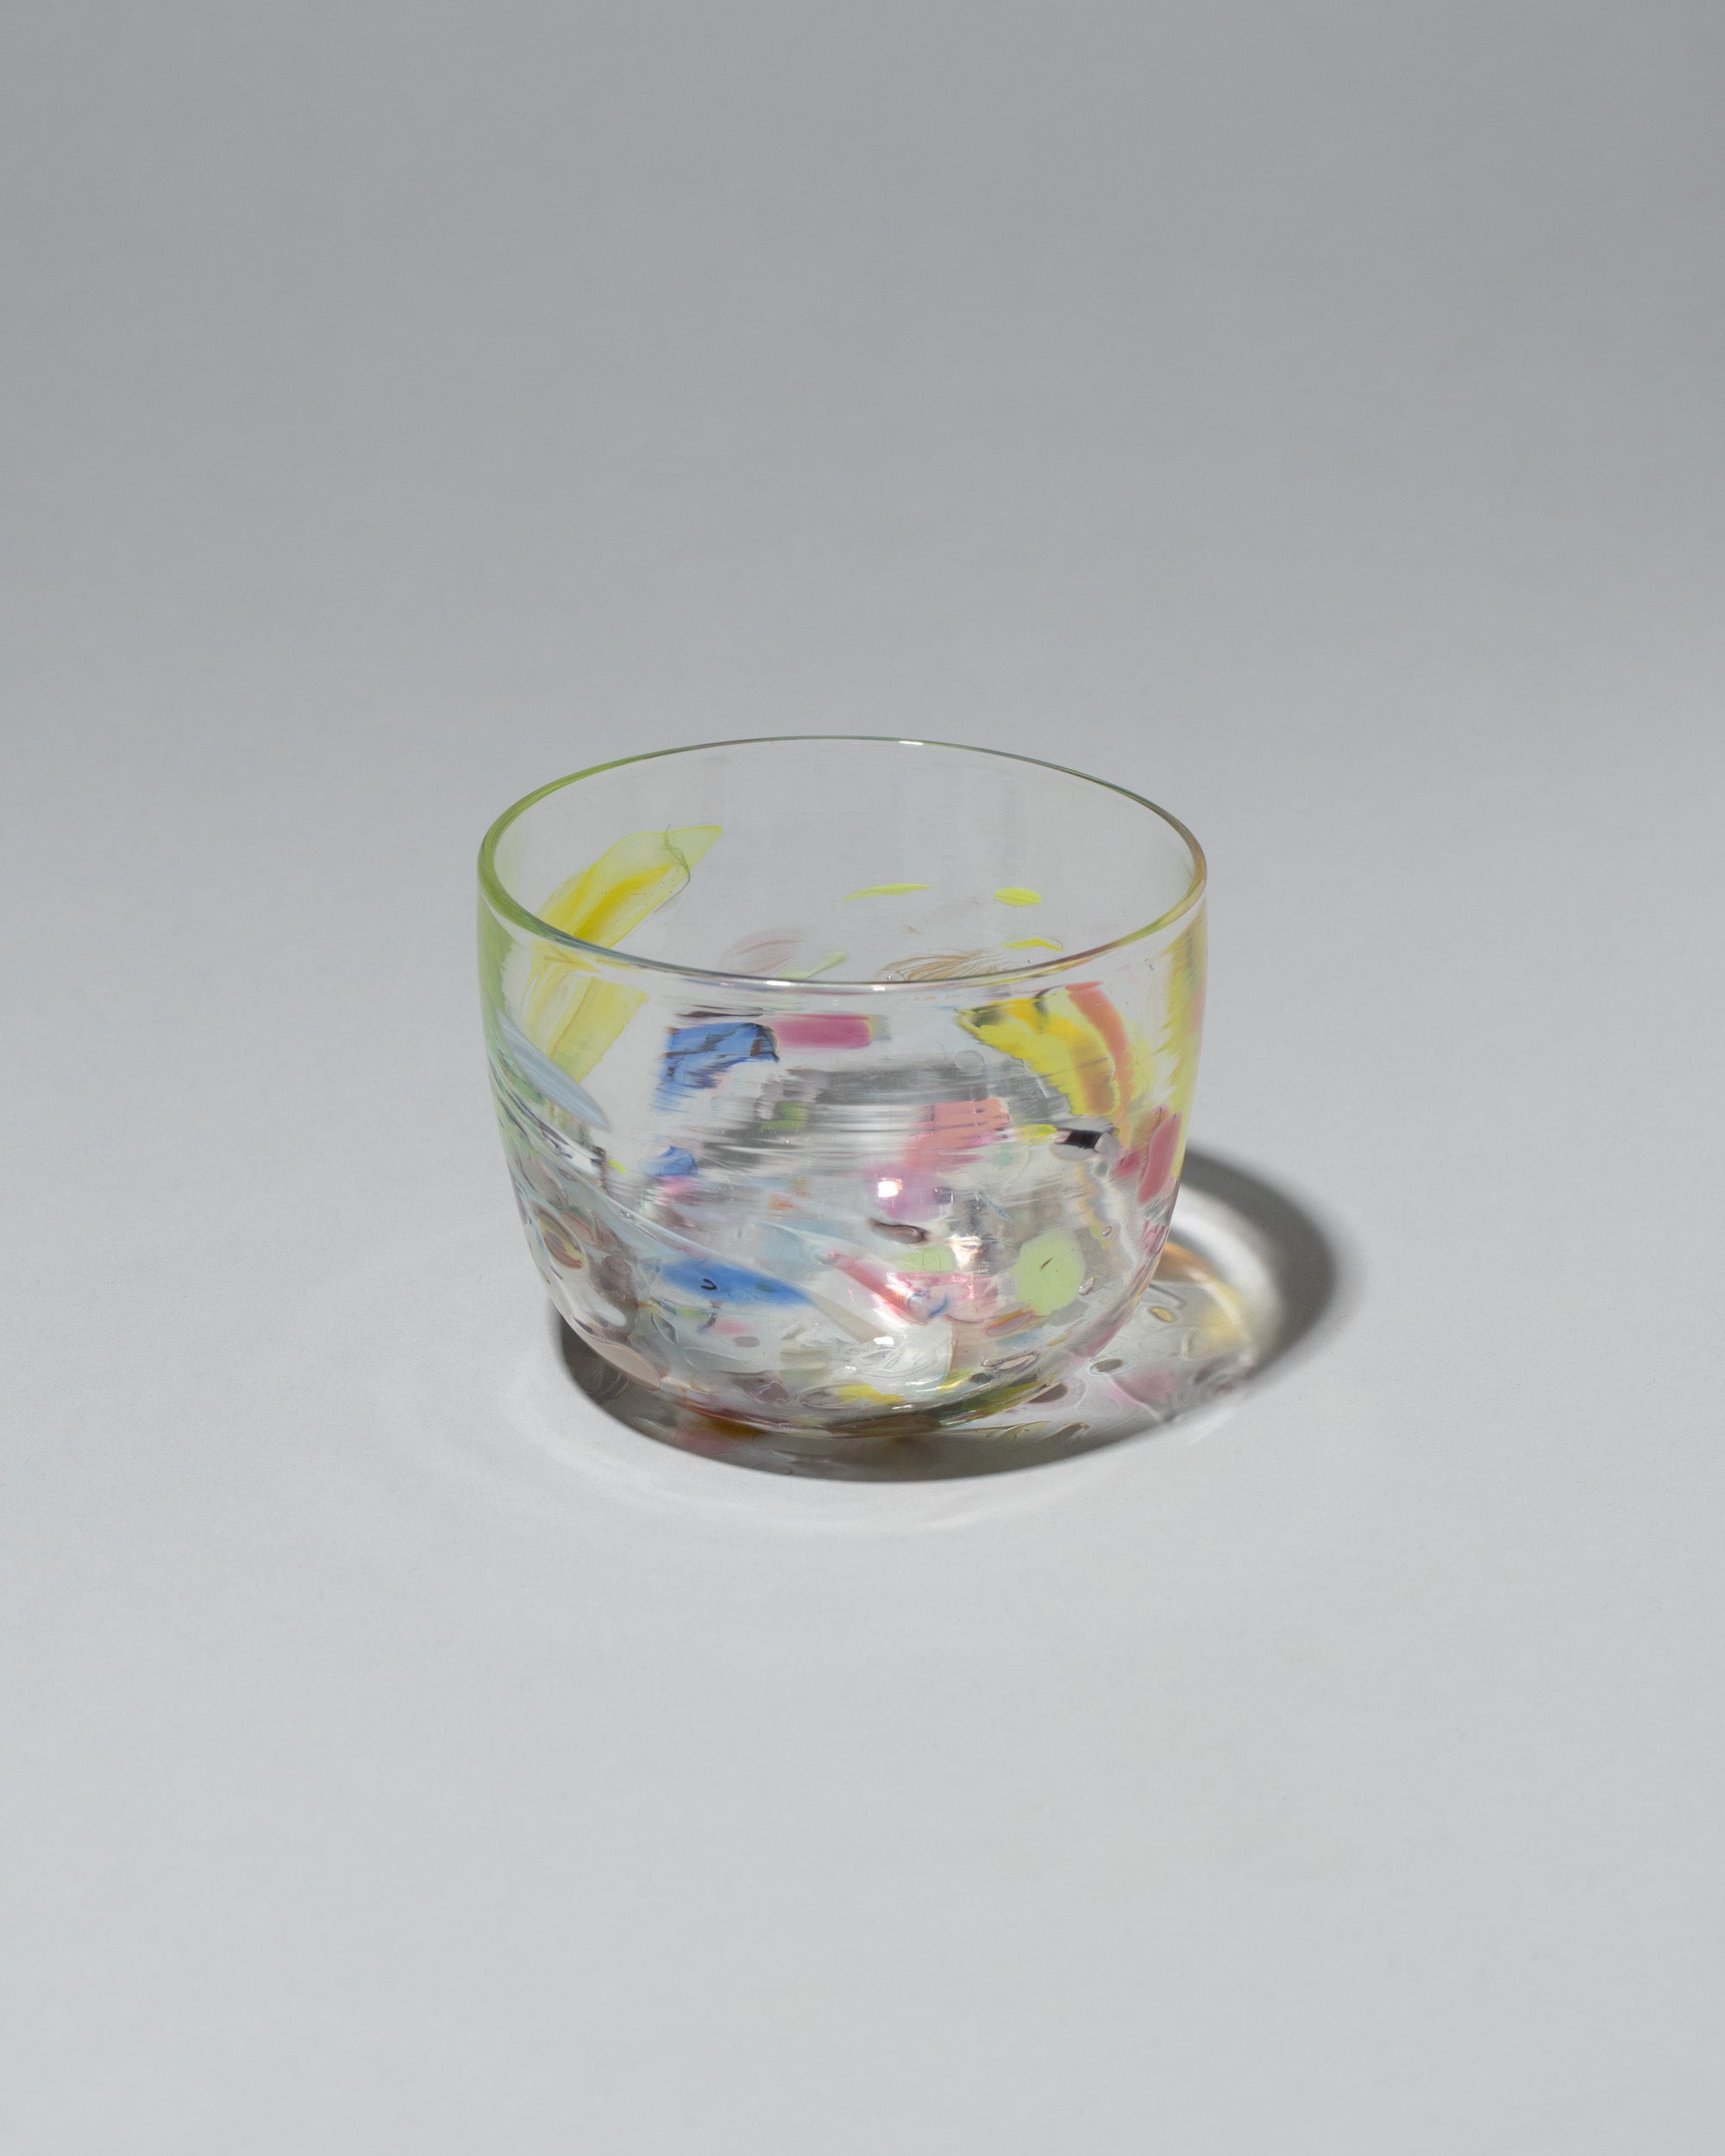 GlassRainbow™ - Premium Rainbow Iridescent Crystal Water Glasses